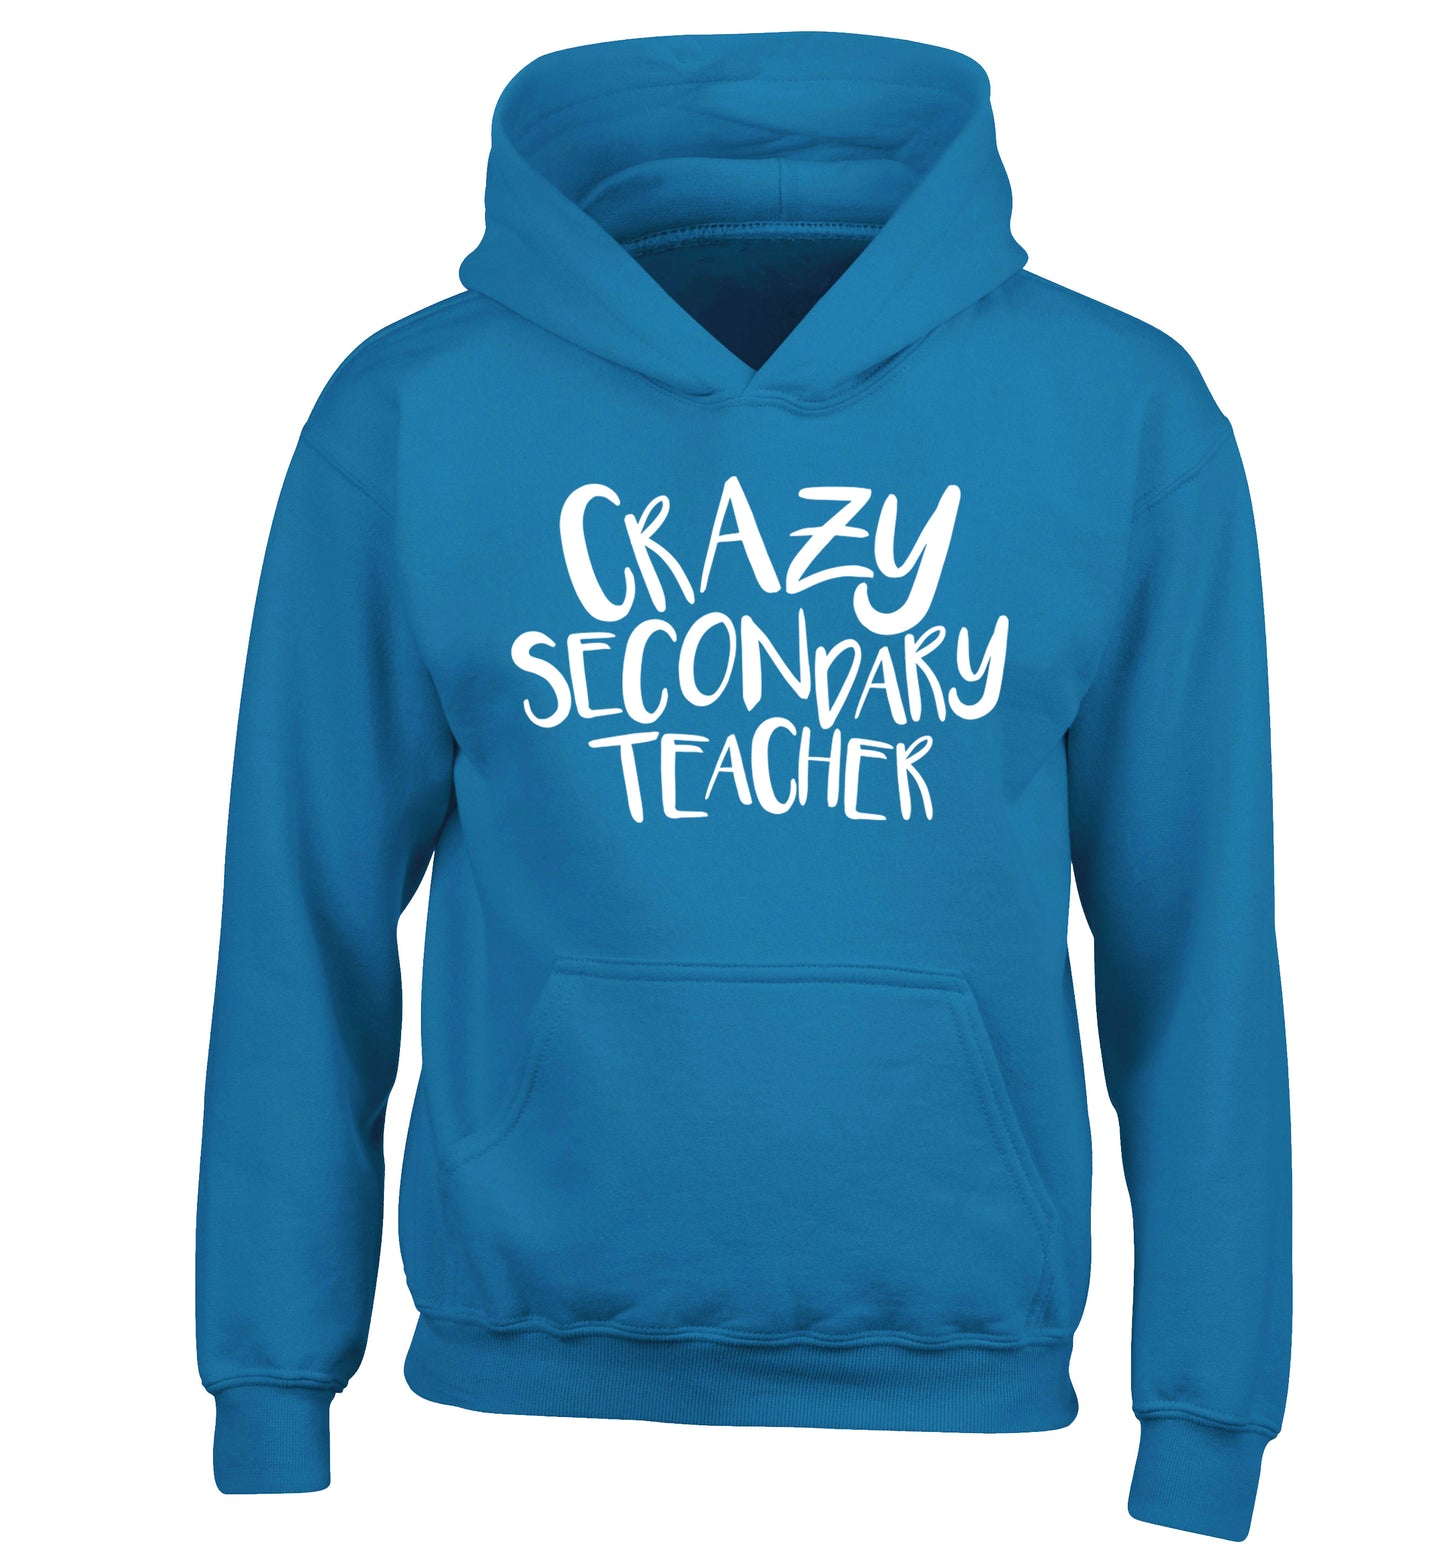 Crazy secondary teacher children's blue hoodie 12-13 Years